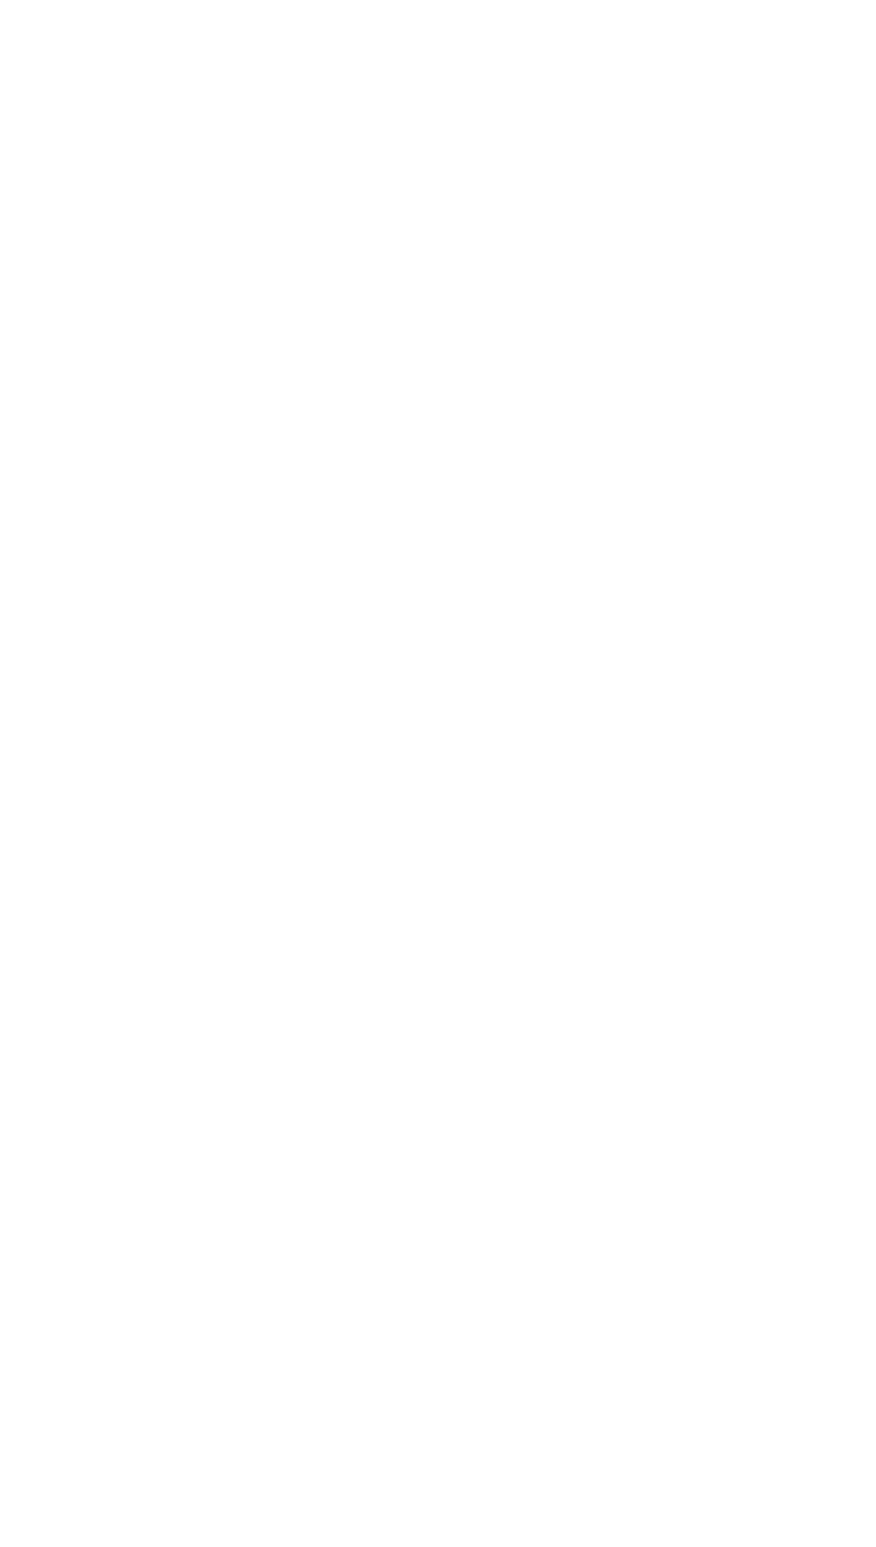 Temenos logo for dark backgrounds (transparent PNG)